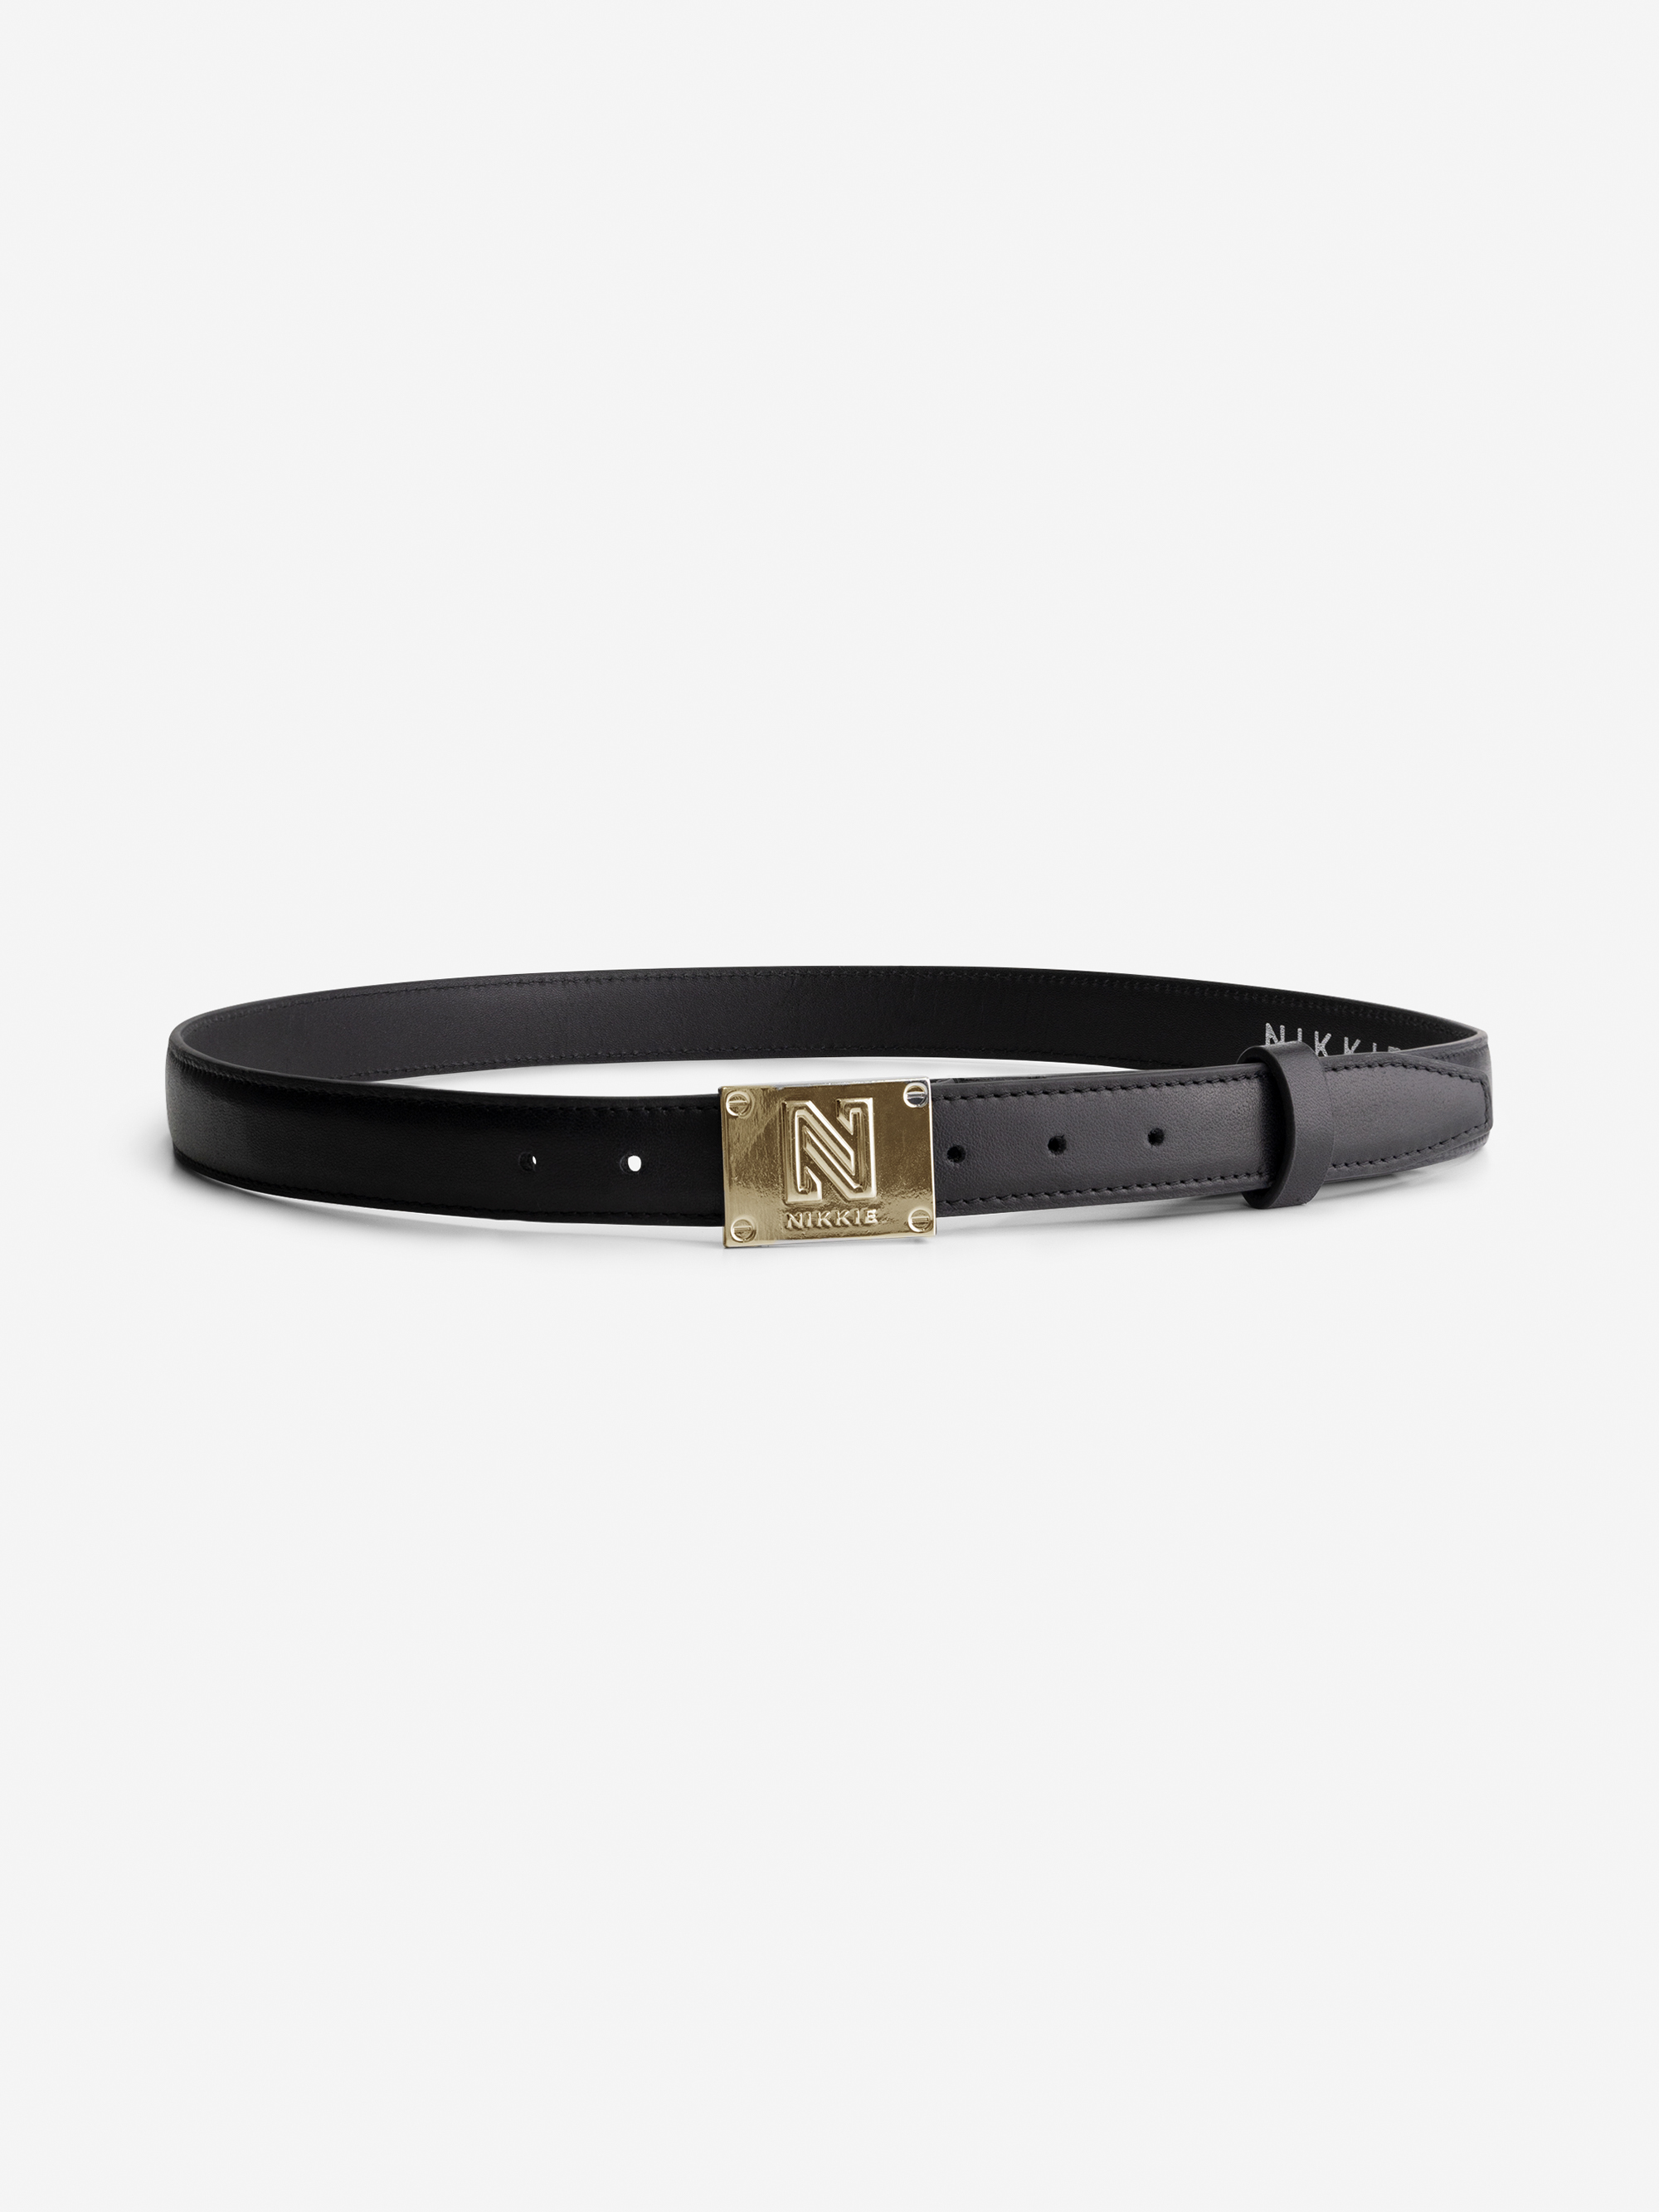 Thin belt with N logo buckle